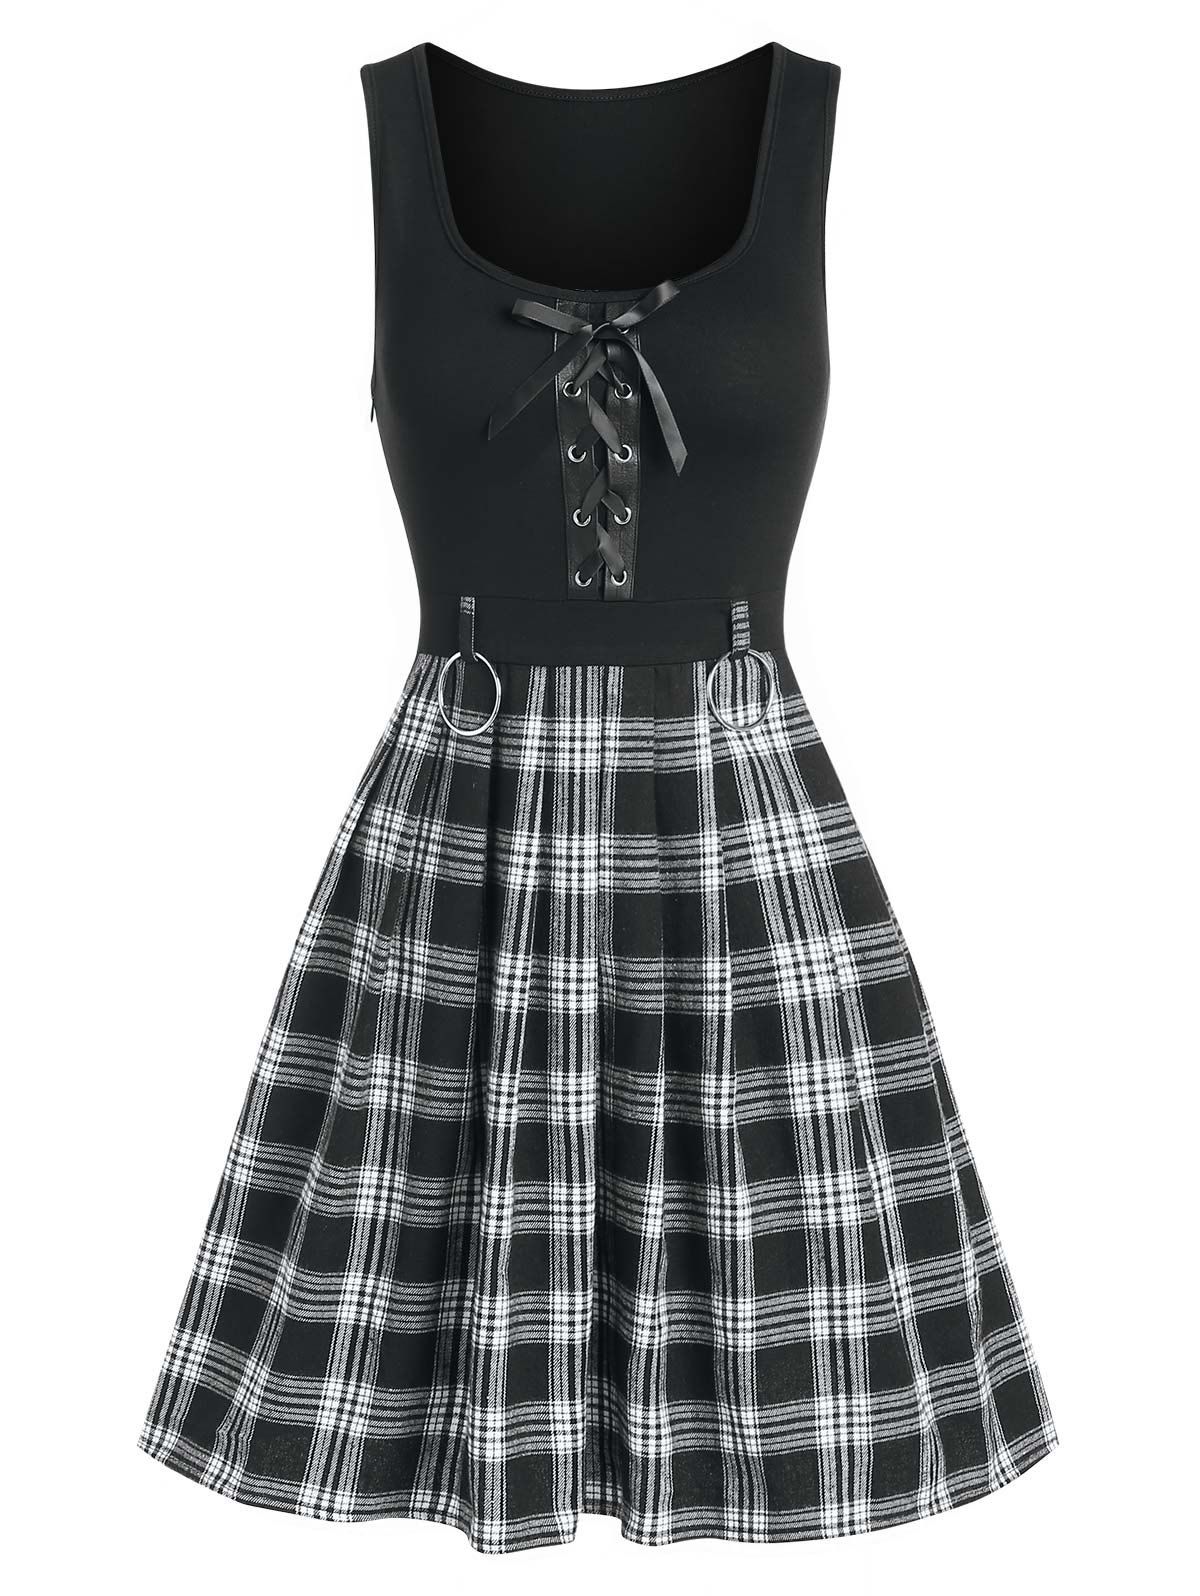 Gothic Lace Up O Ring Plaid Dress - BLACK XXXL